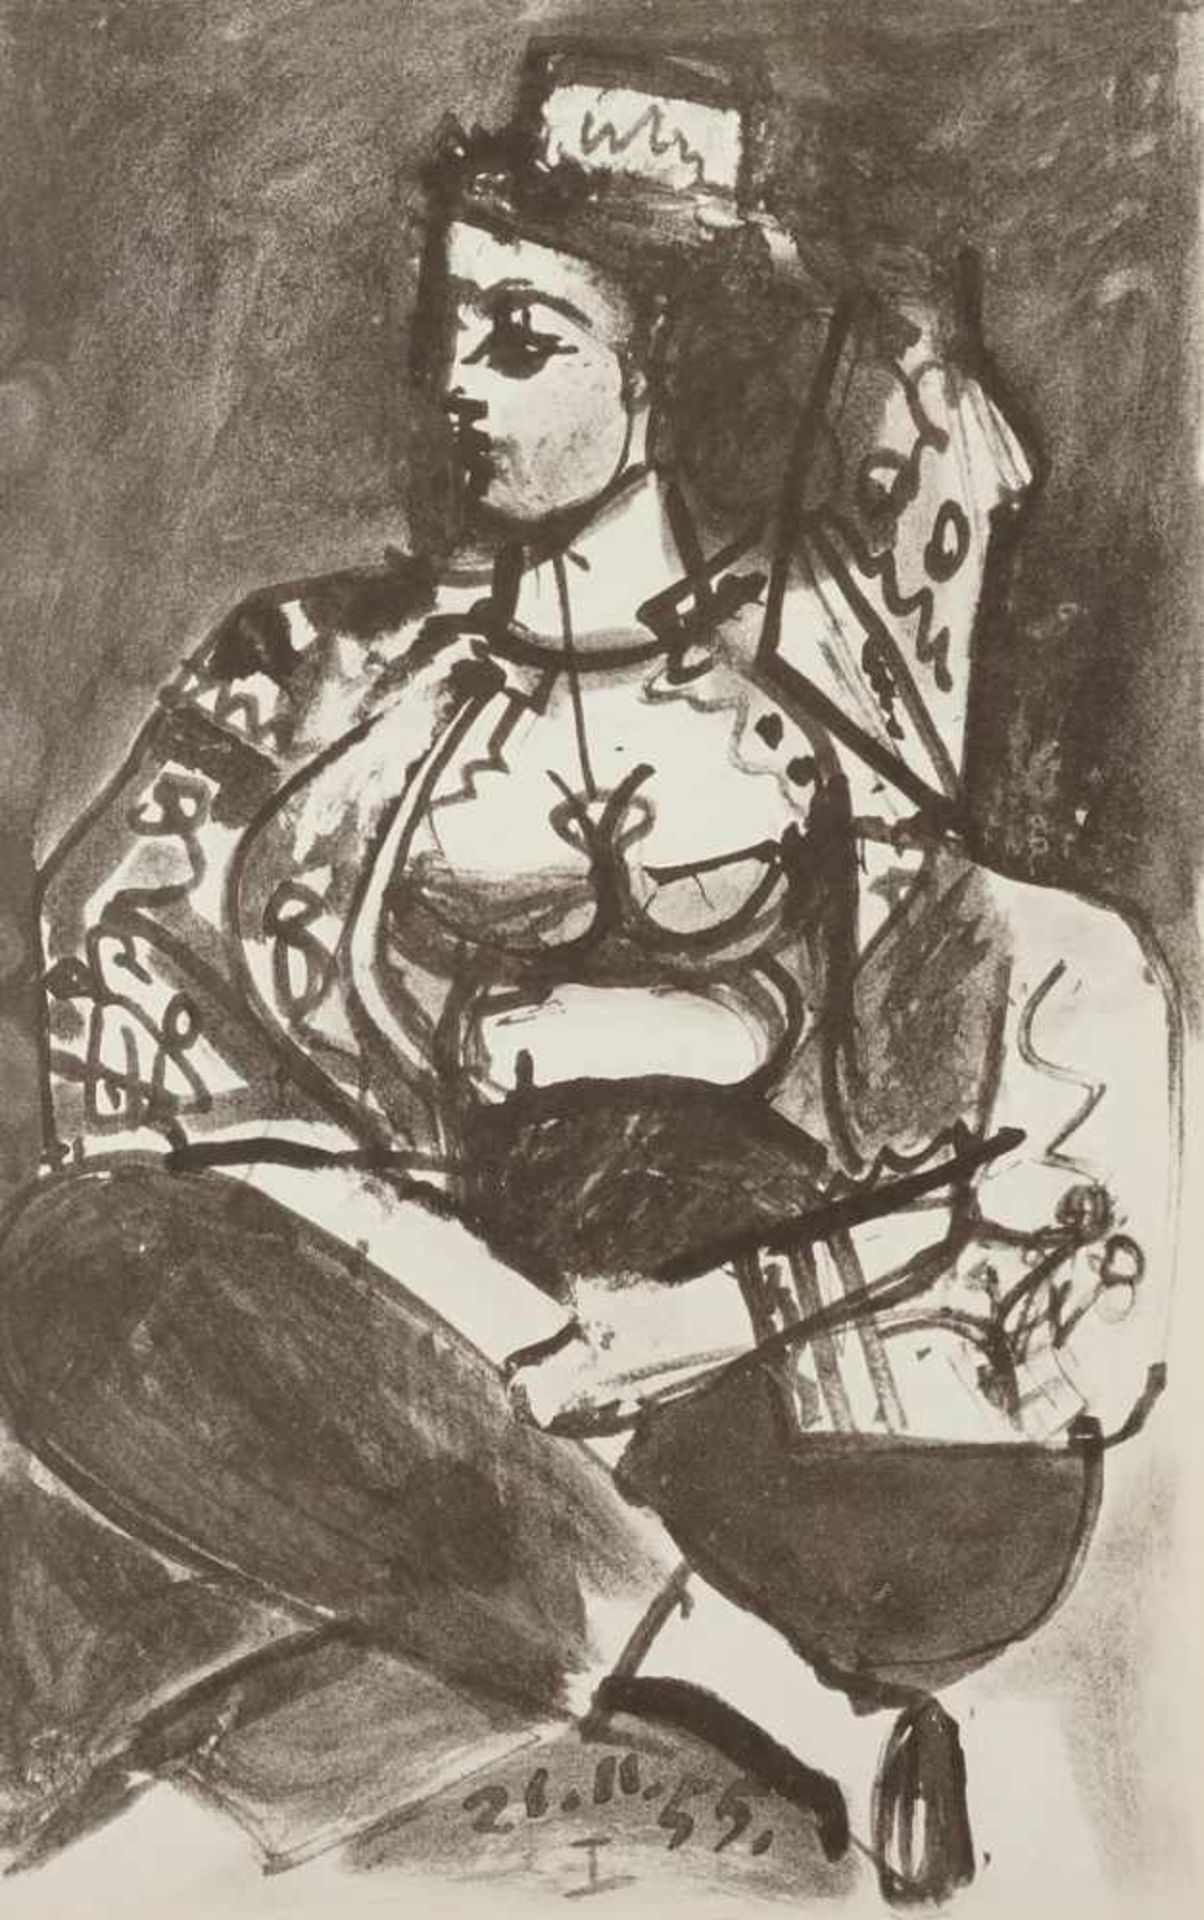 Pablo Picasso, "Femme accroupie (Kauernde Frau), 21.11.55 I"